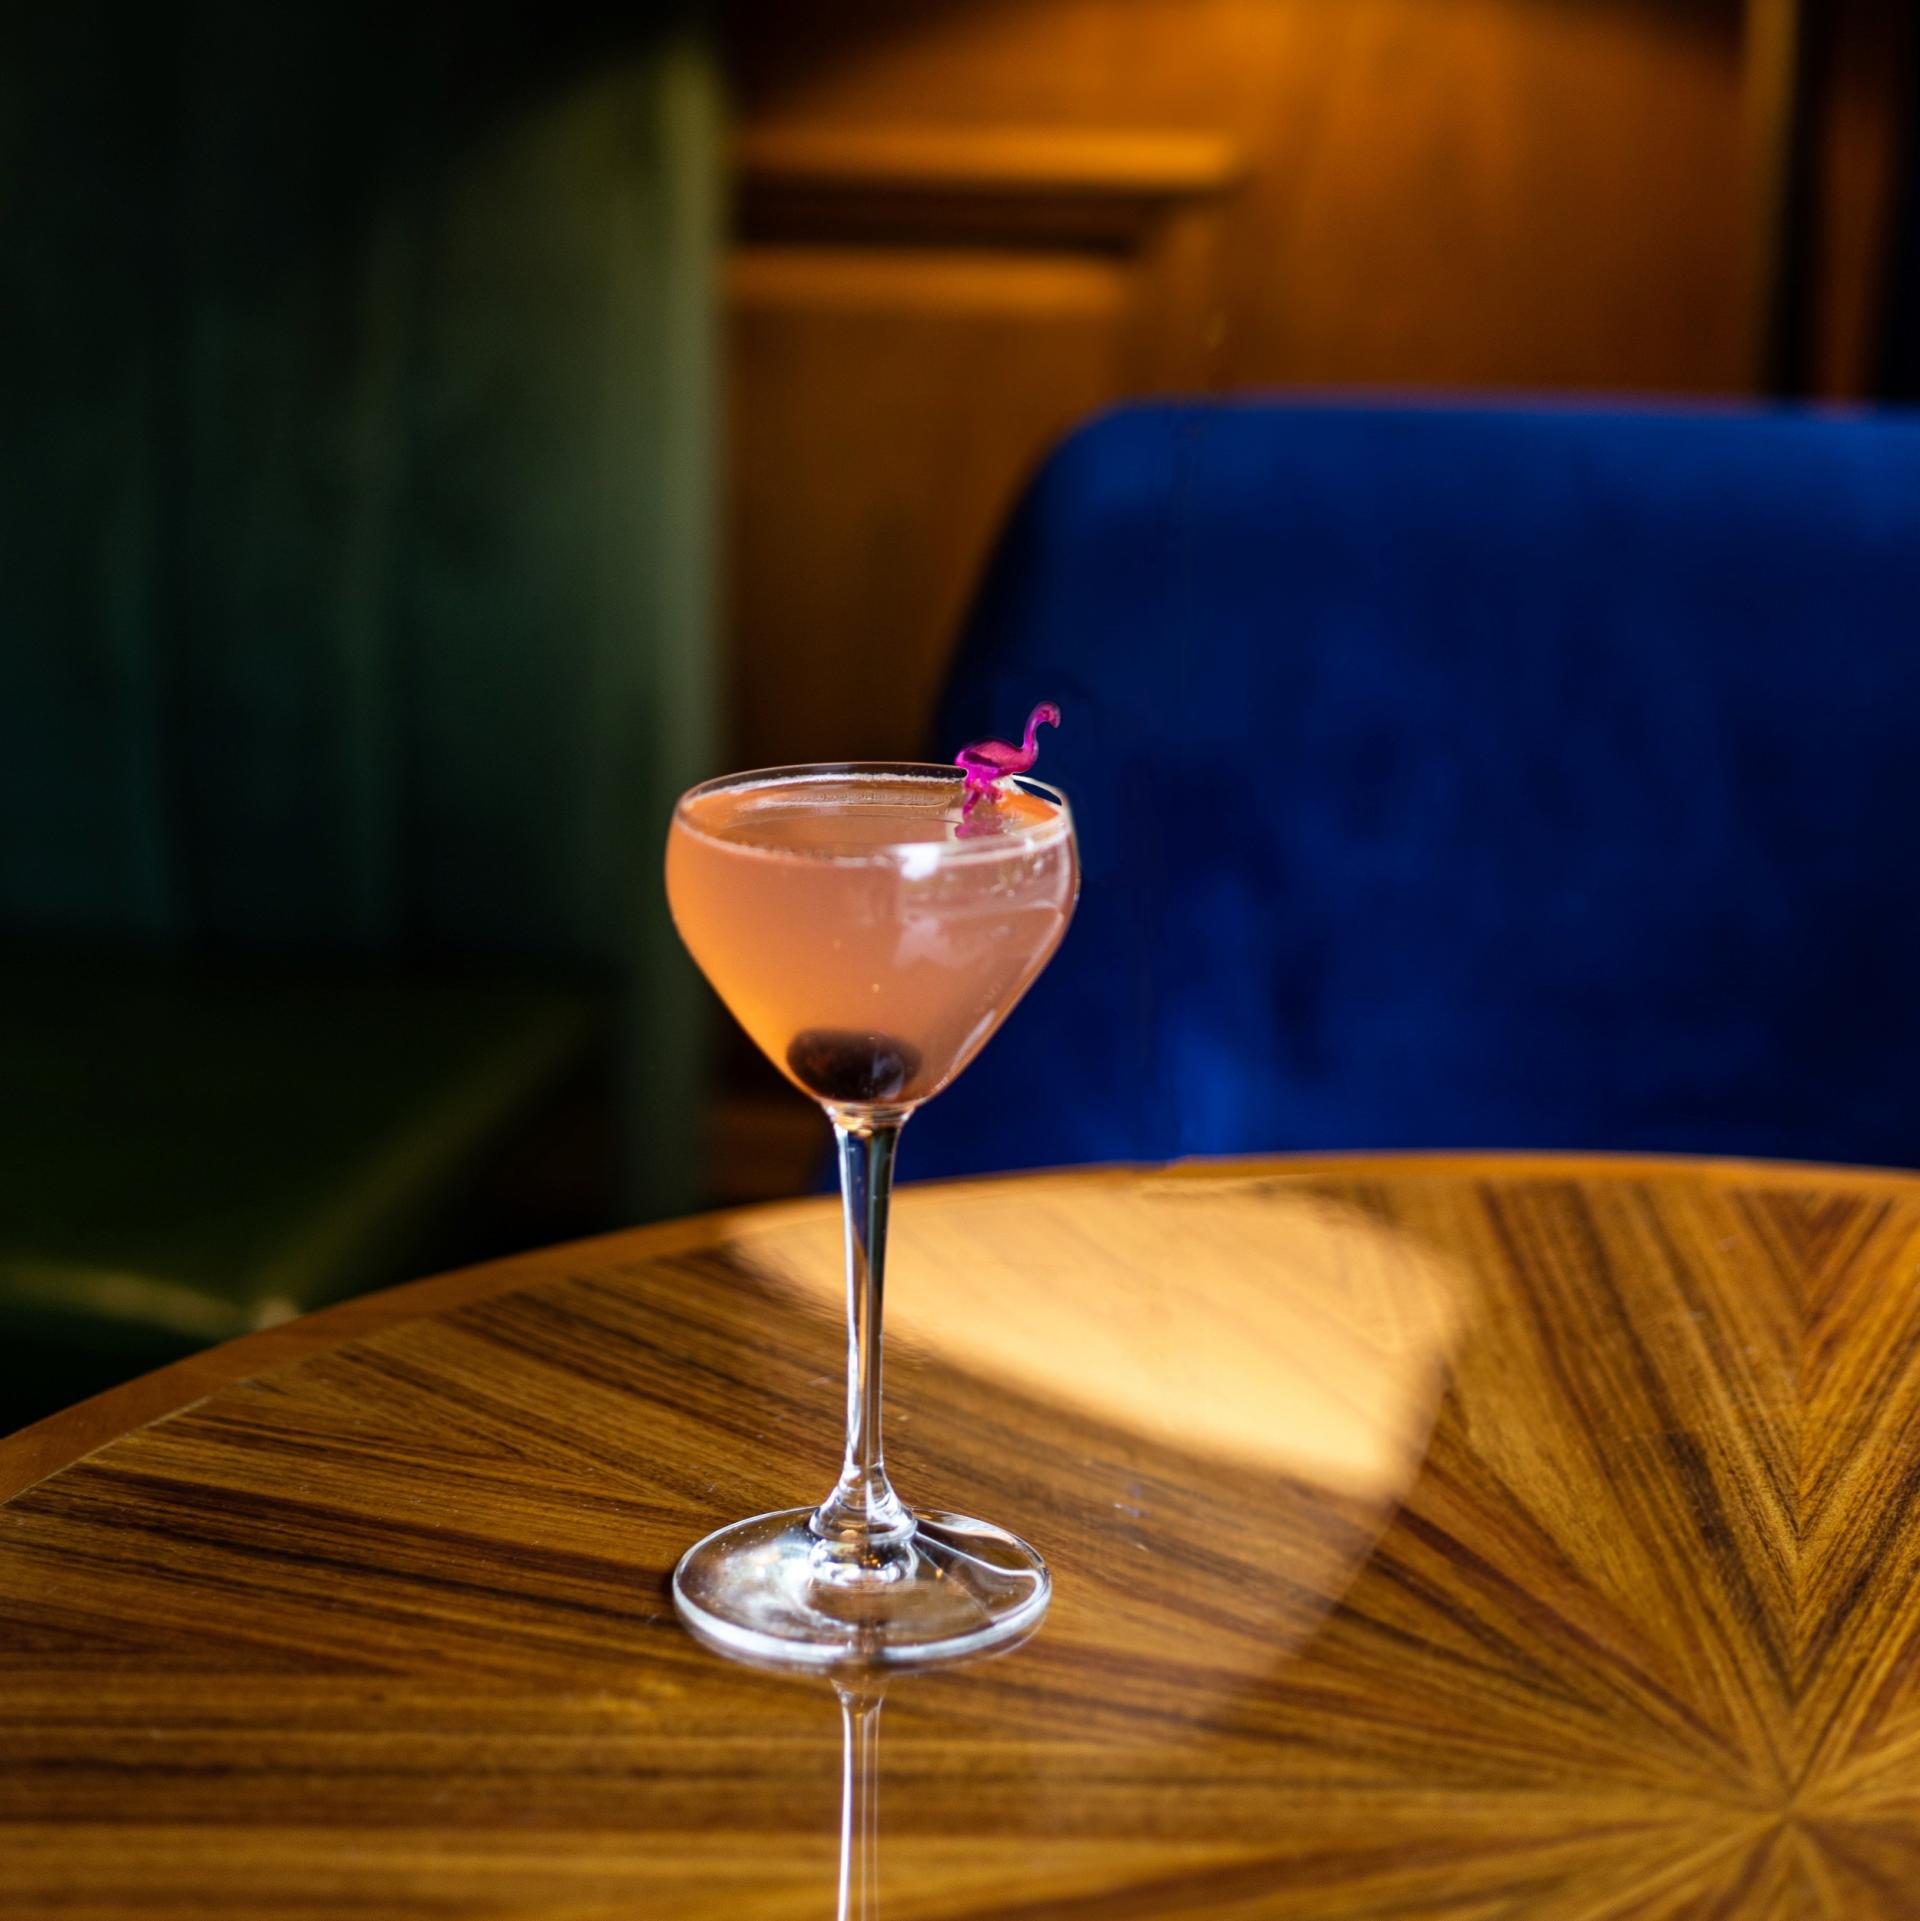 The Pink Flamingo cocktail at The Street Bar, at The Newbury Boston